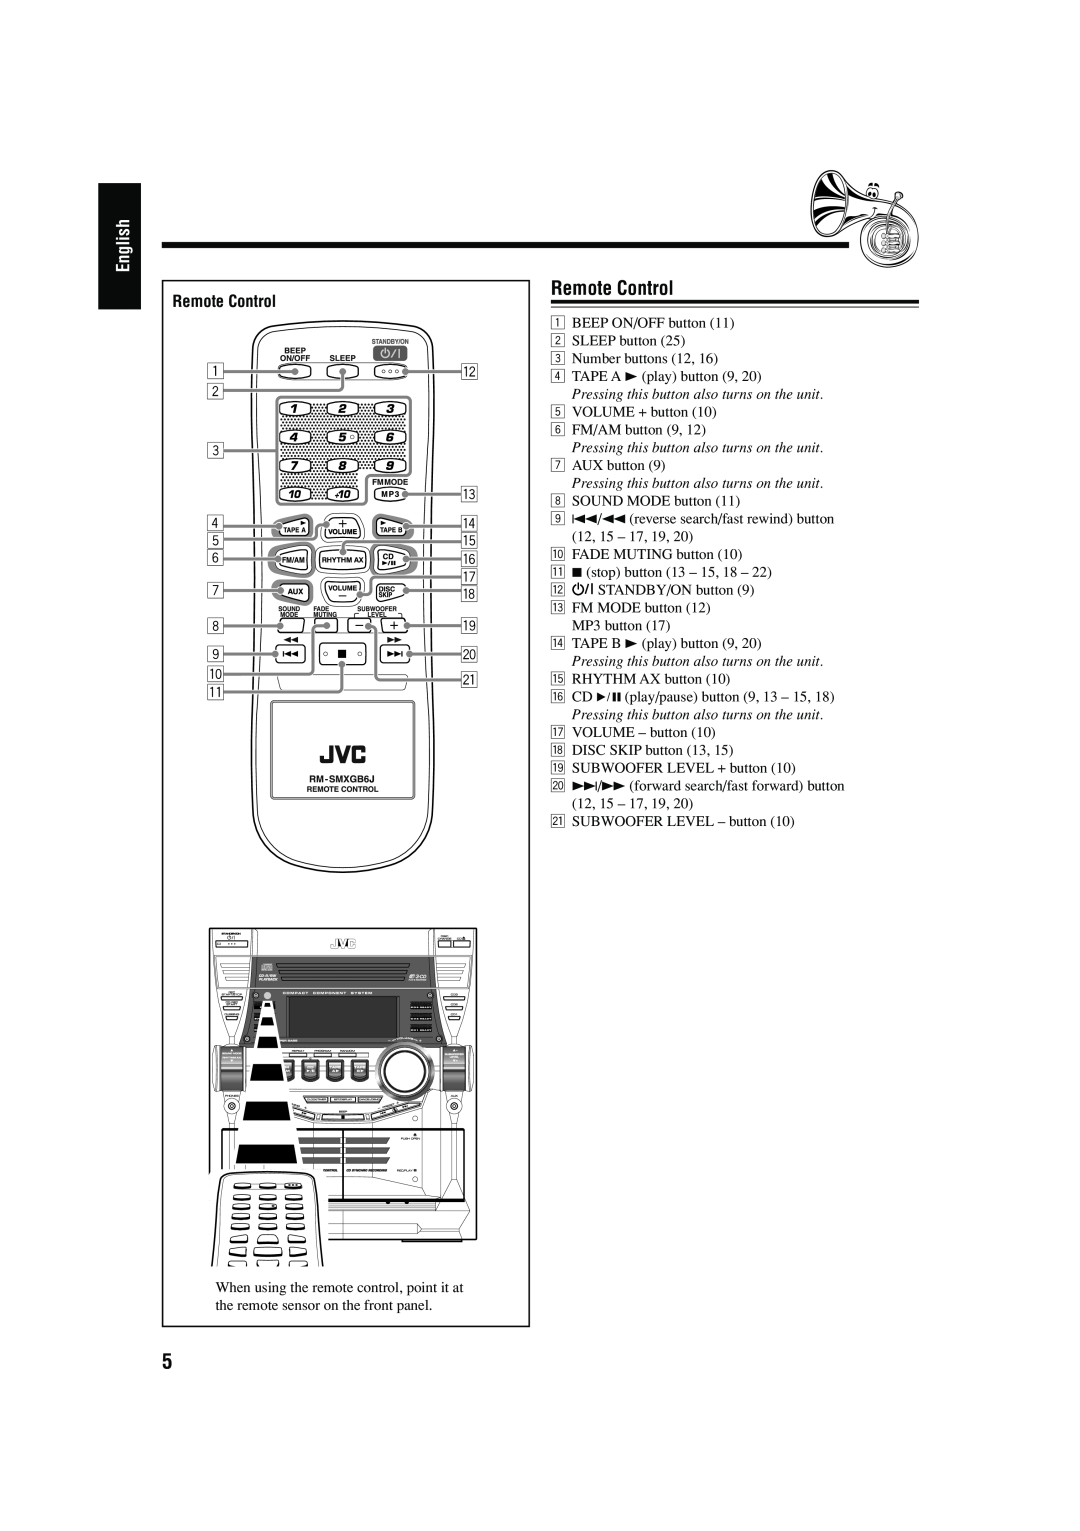 JVC MX-GB5C manual Remote Control, English 